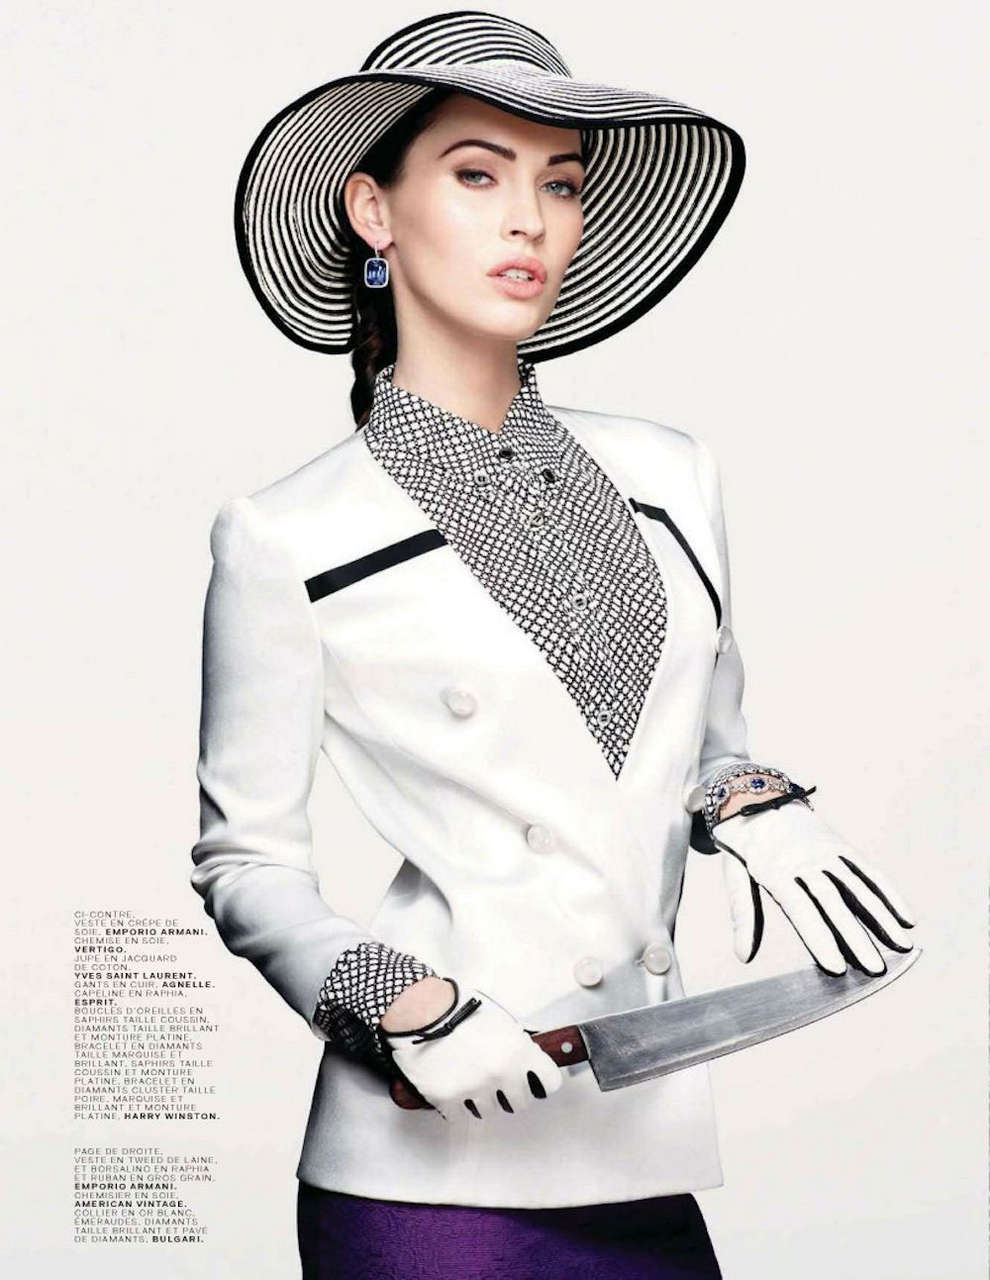 Megan Fox Jalouse Magazine April 2012 Issue